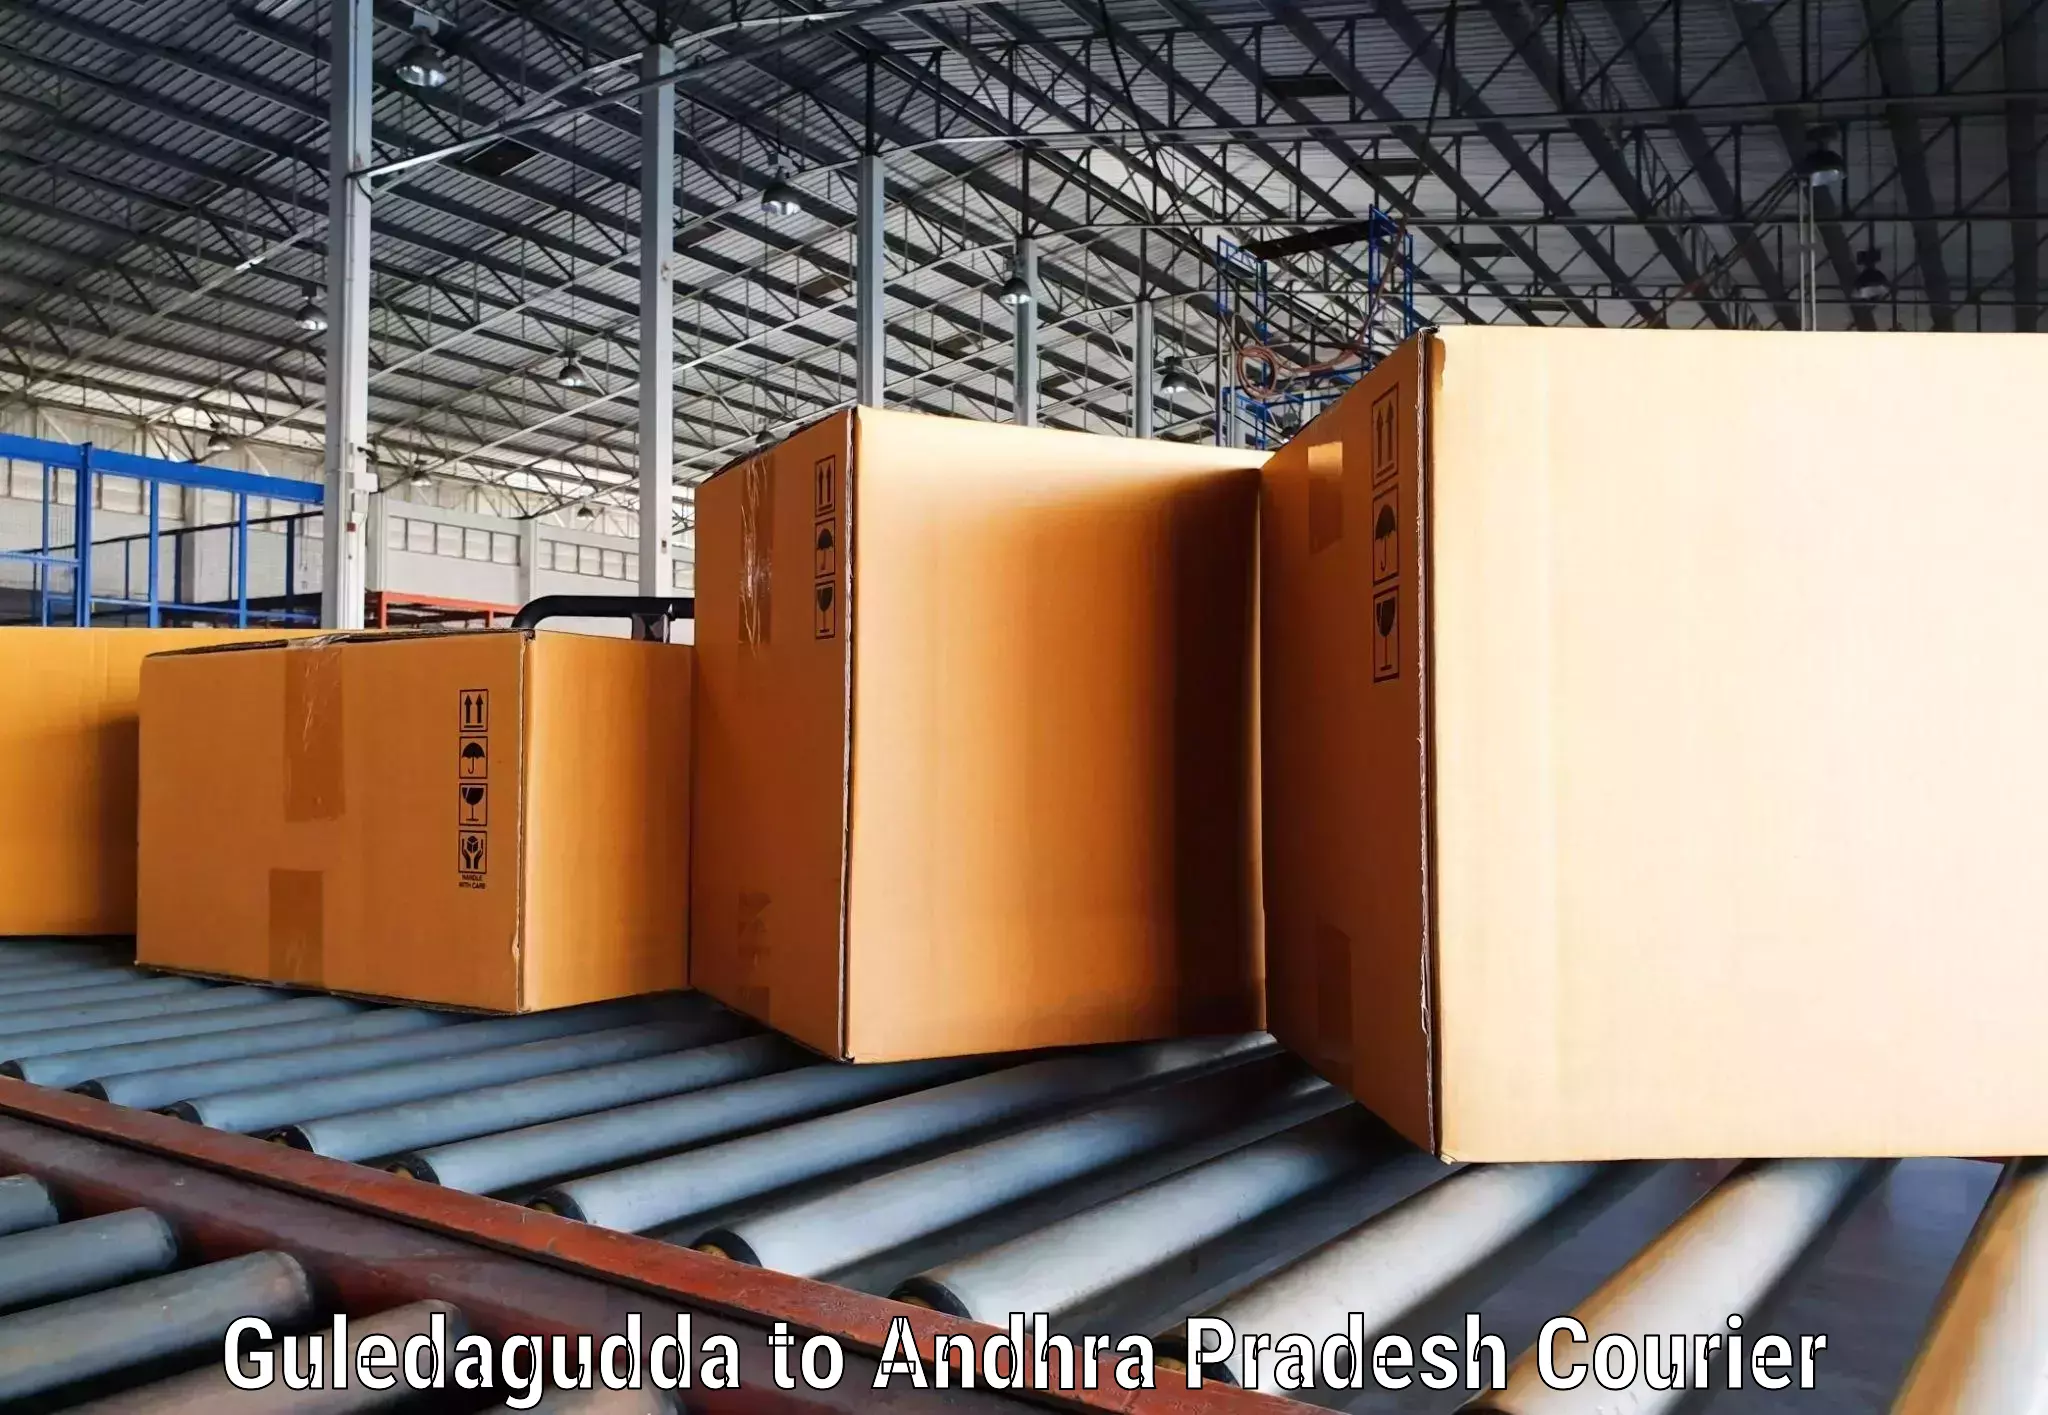 High-performance logistics Guledagudda to Amadalavalasa